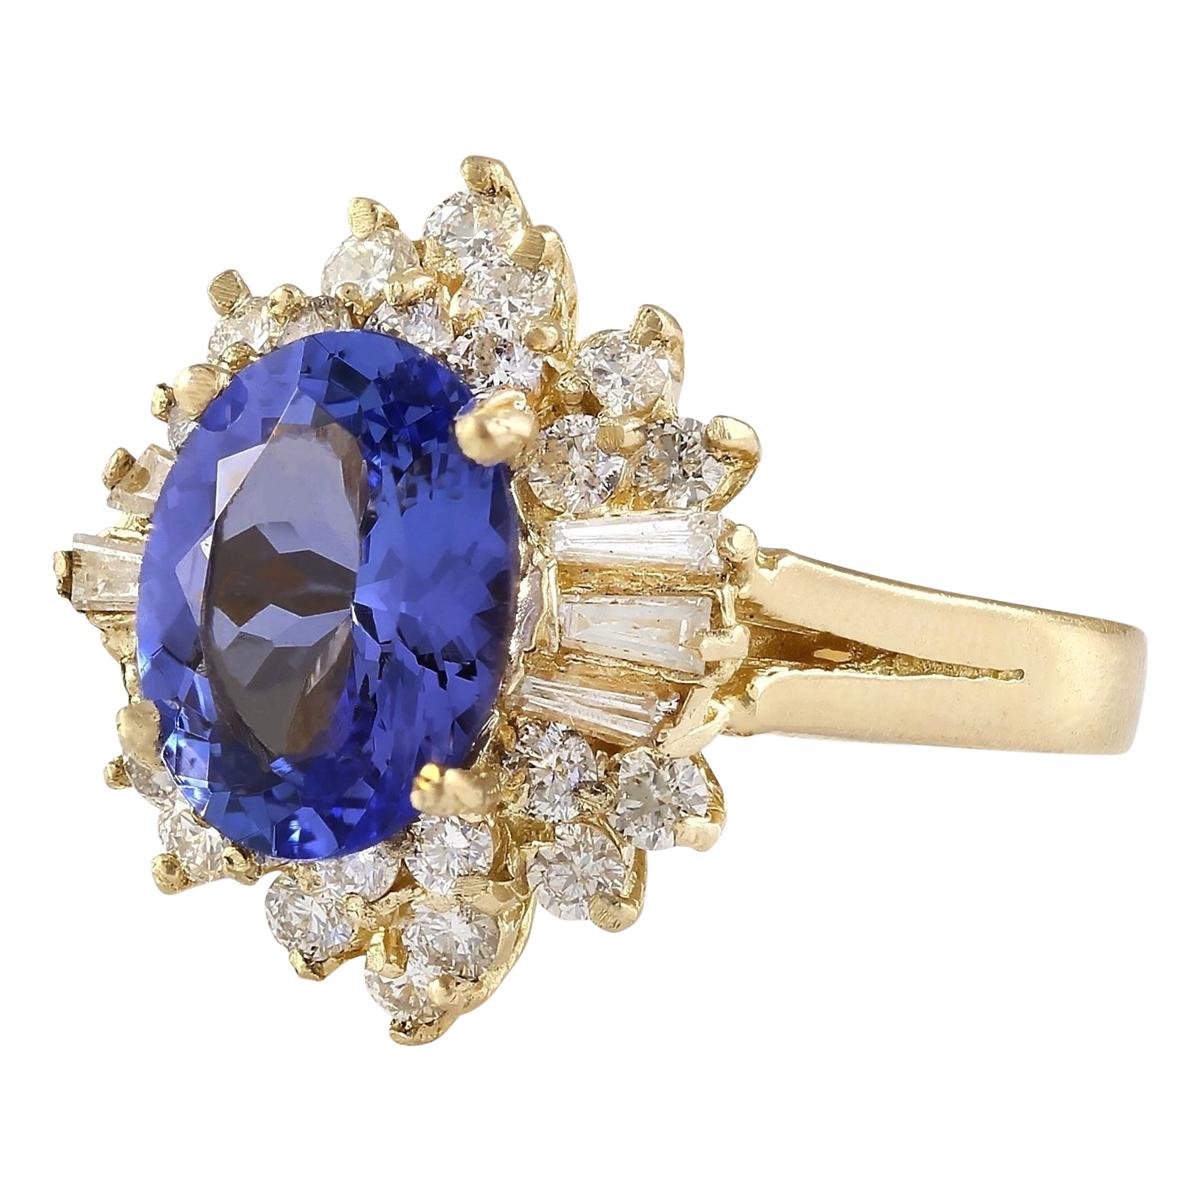 4.62 Carat Natural Tanzanite 14 Karat Yellow Gold Diamond Ring
Stamped: 14K Yellow Gold
Total Ring Weight: 7.1 Grams
Total Natural Tanzanite Weight is 3.07 Carat (Measures: 11.00x9.00 mm)
Color: Blue
Total Natural Diamond Weight is 1.55